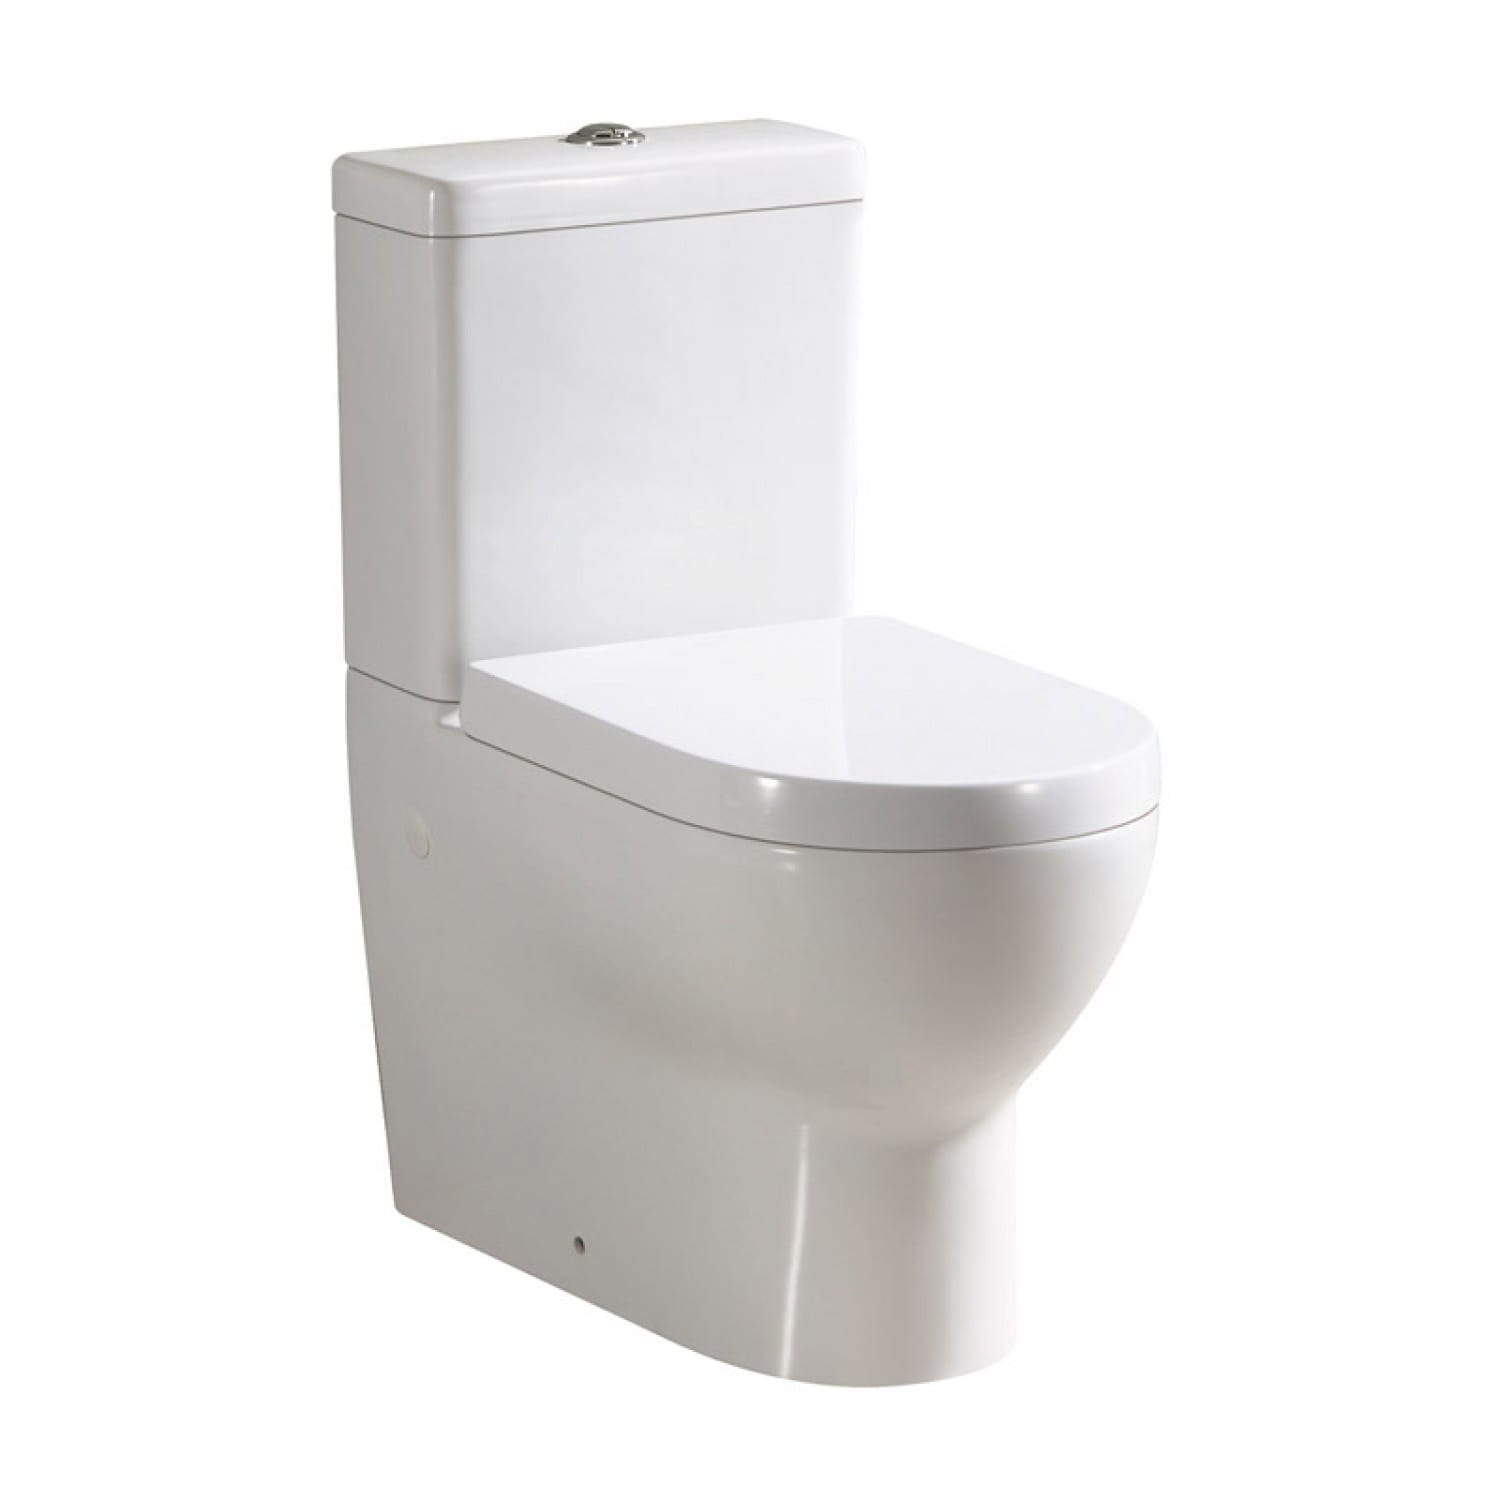 KDK-014 Toilet